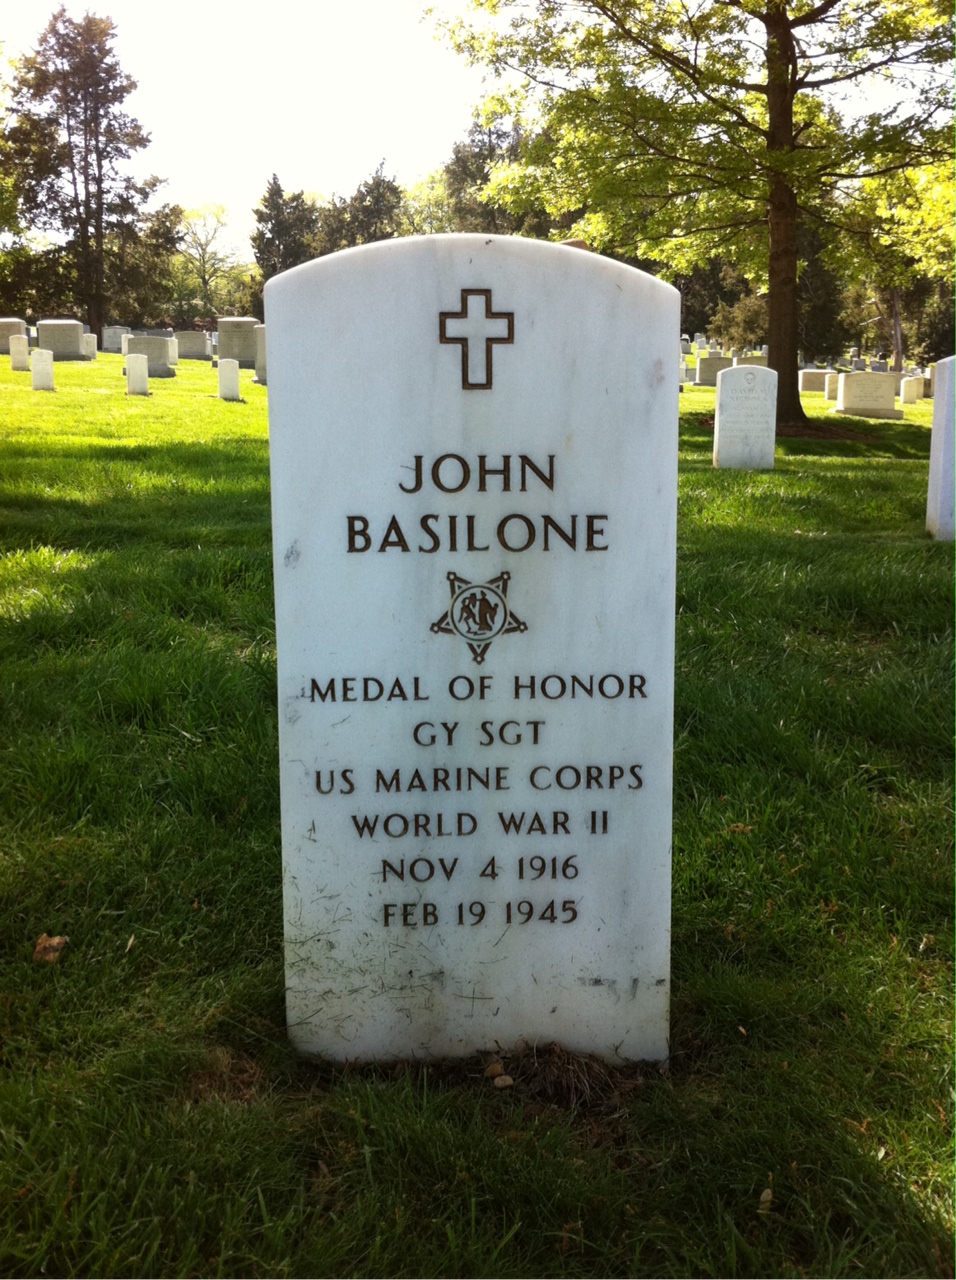 Gravestone of World War II Medal of Honor recipient John Basilone